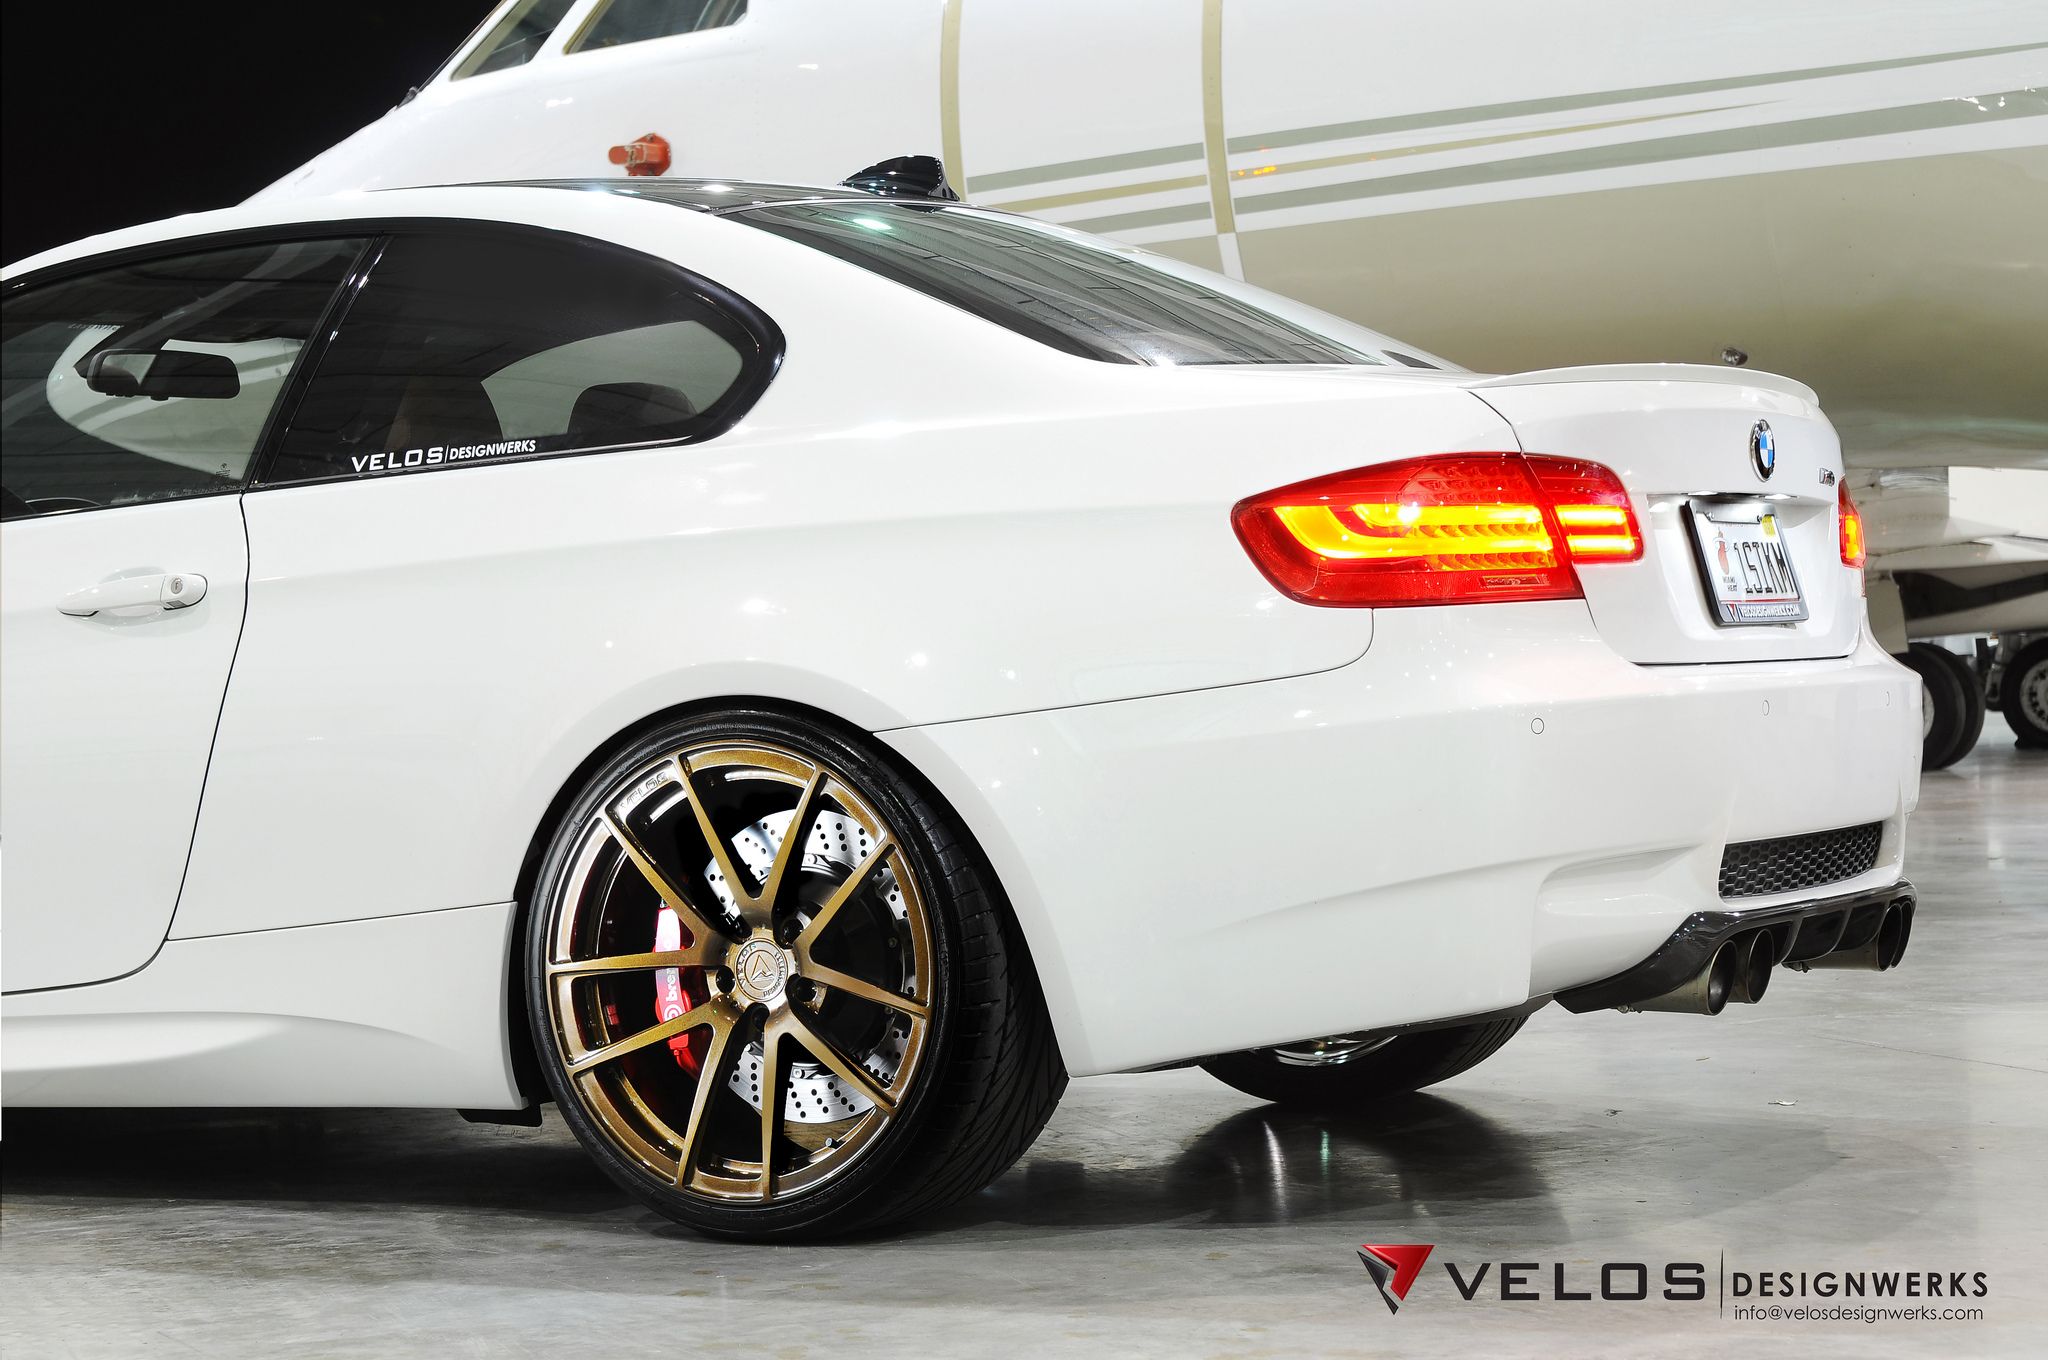 2012 BMW M3 by Velos Designwerks